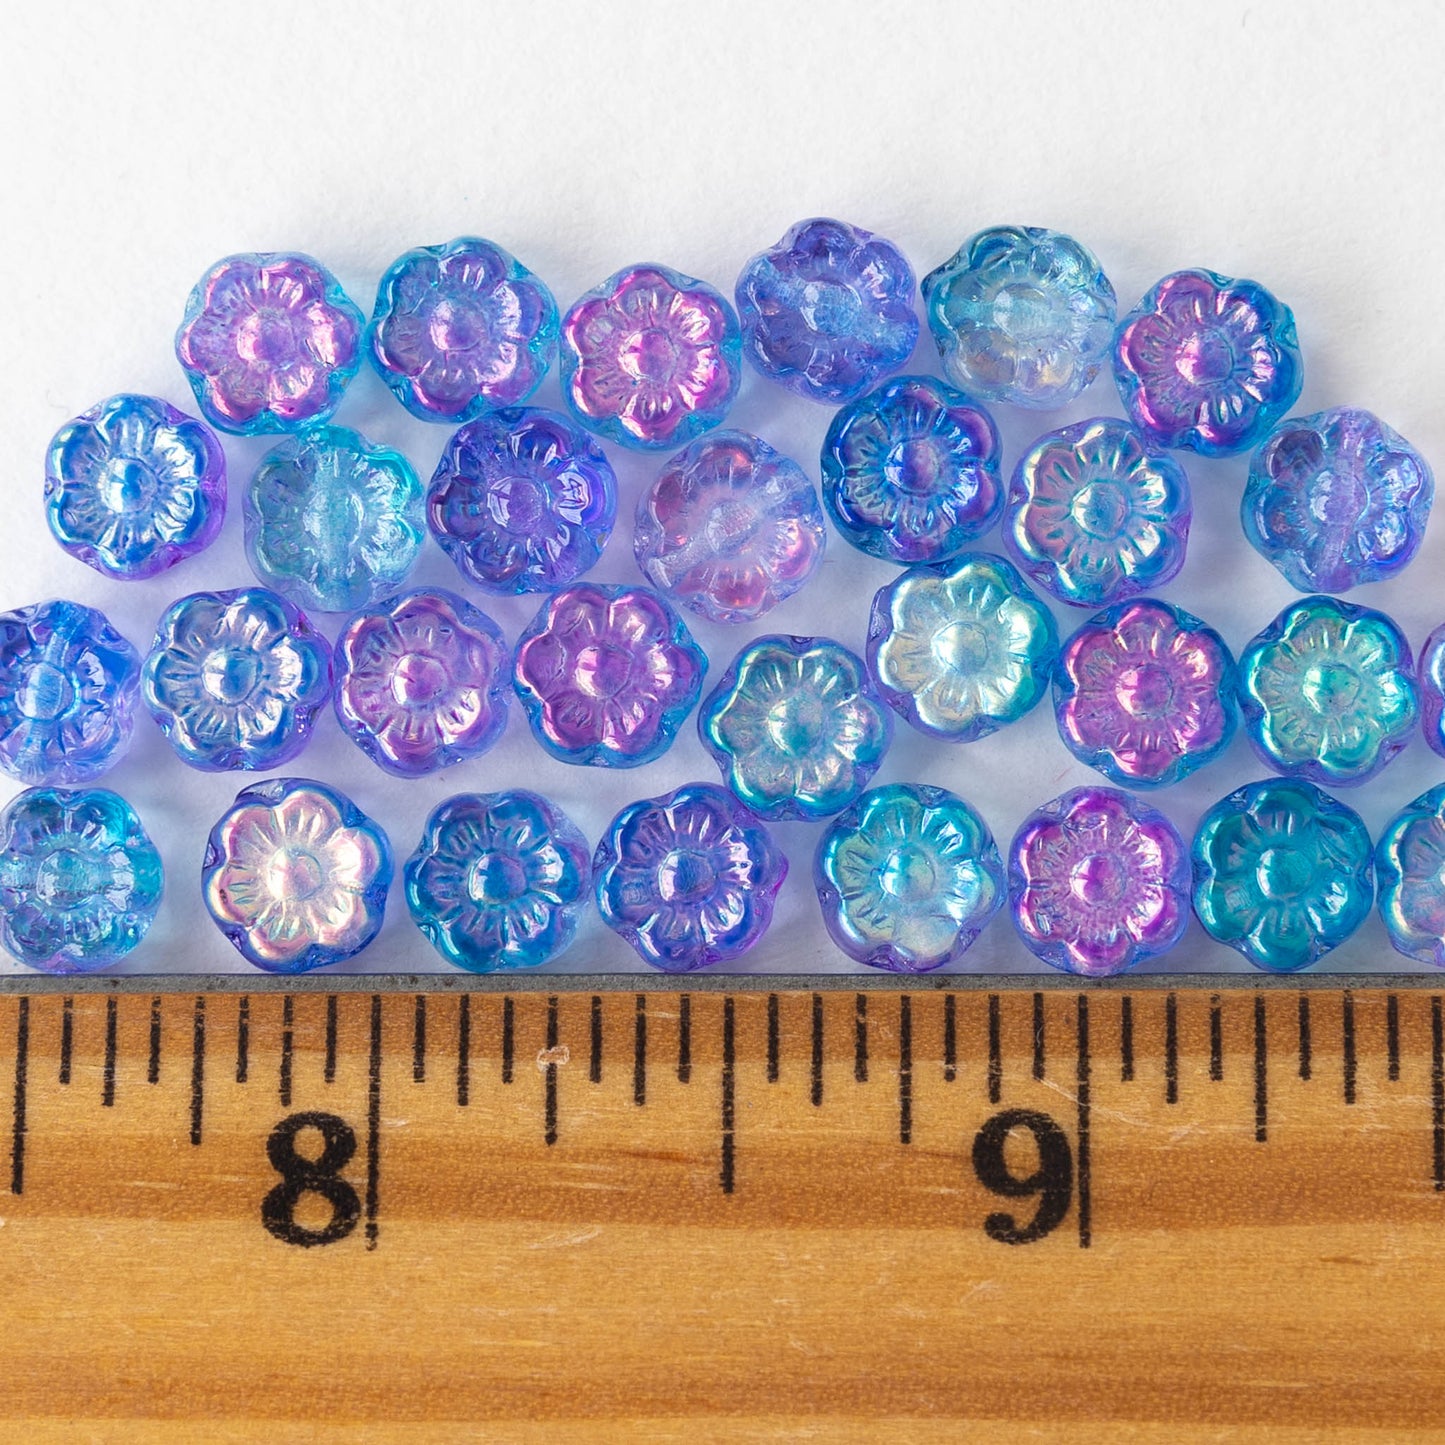 6mm Glass Flower Beads - Blue Lavender AB - 30 beads – funkyprettybeads